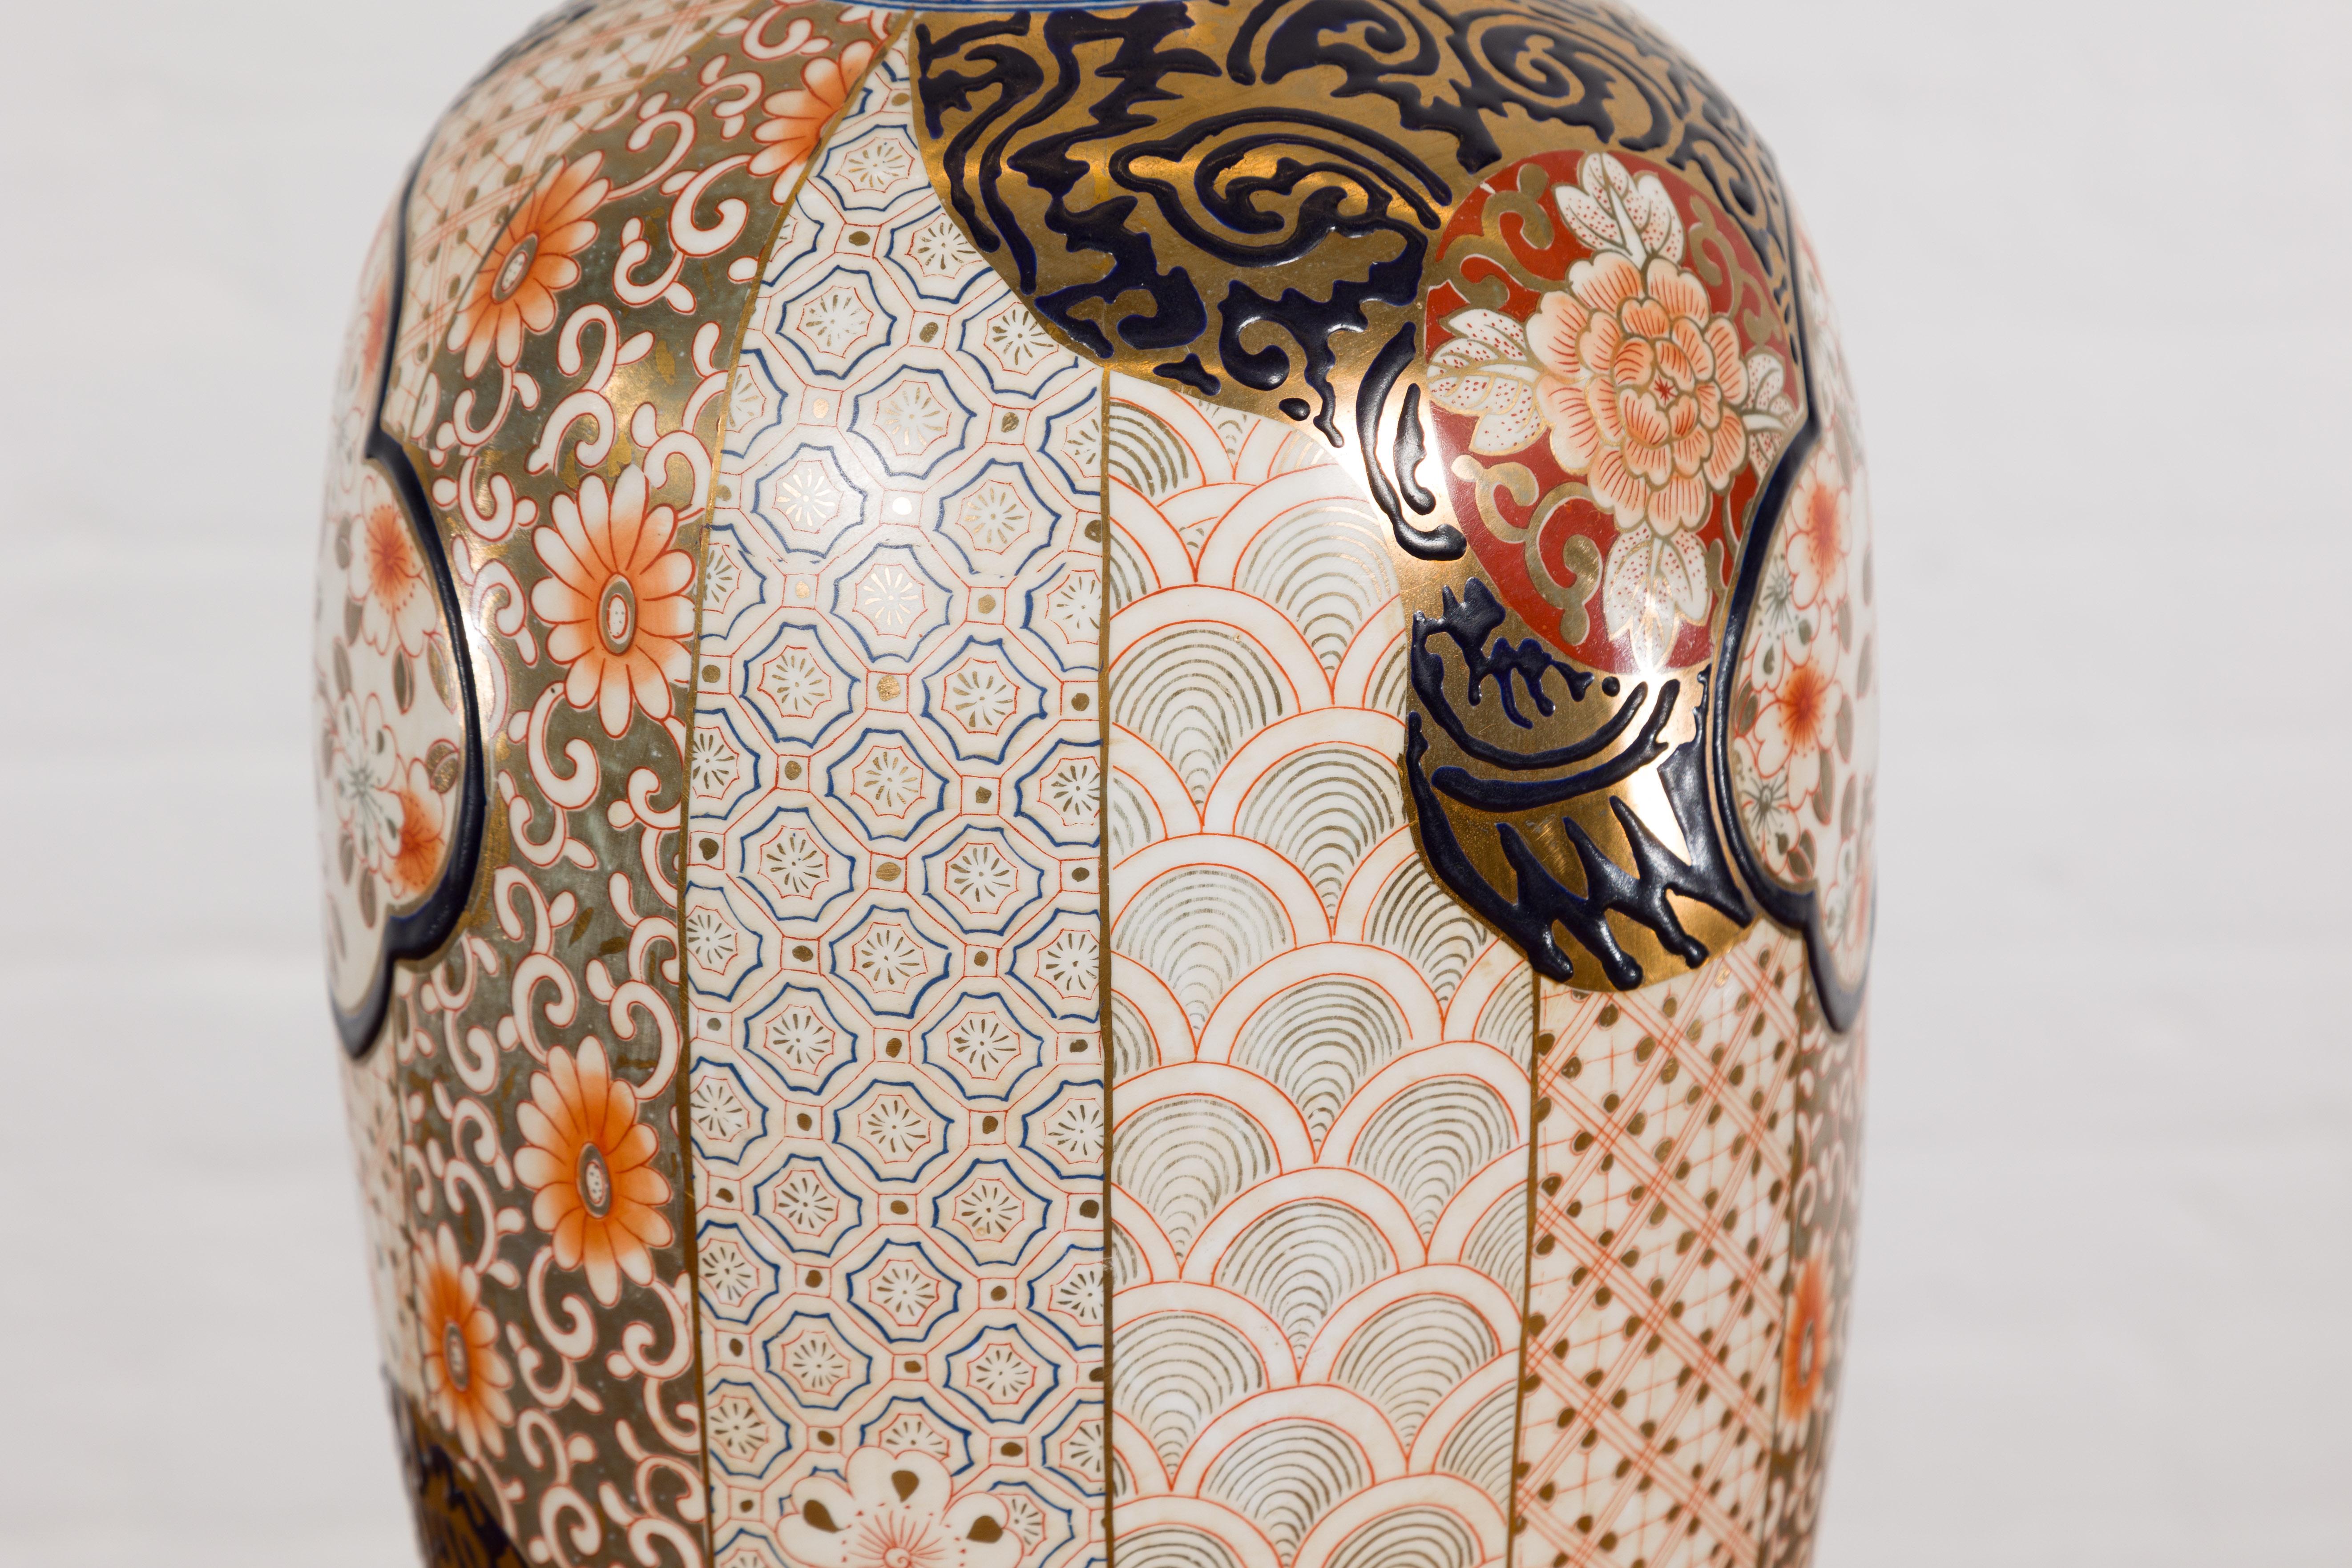 Porcelain Arita Japanese Style Vase with Gold, Blue and Orange Floral Motifs For Sale